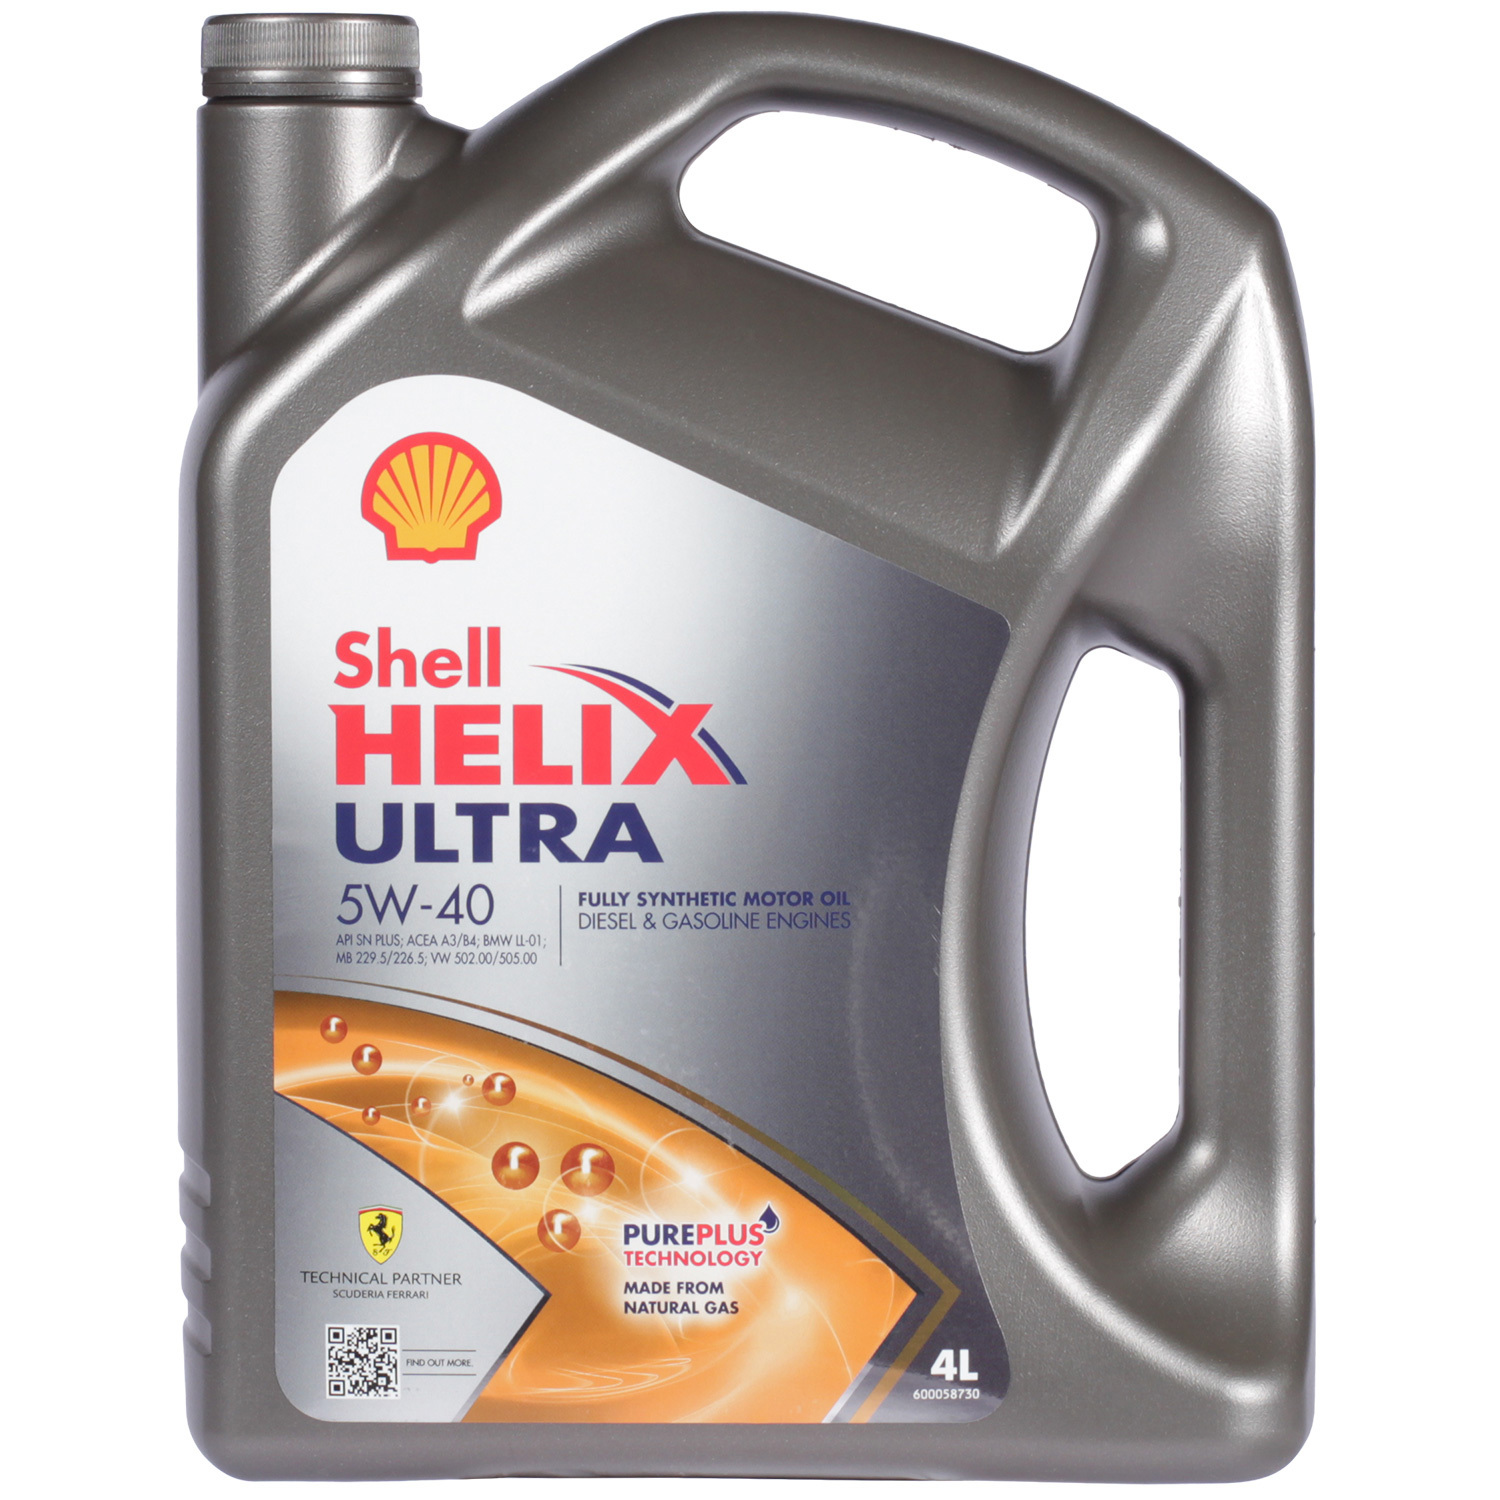 Shell Моторное масло Shell Helix Ultra 5W-40, 4 л моторное масло shell helix hx8 ect 5w 30 4 л синтетическое